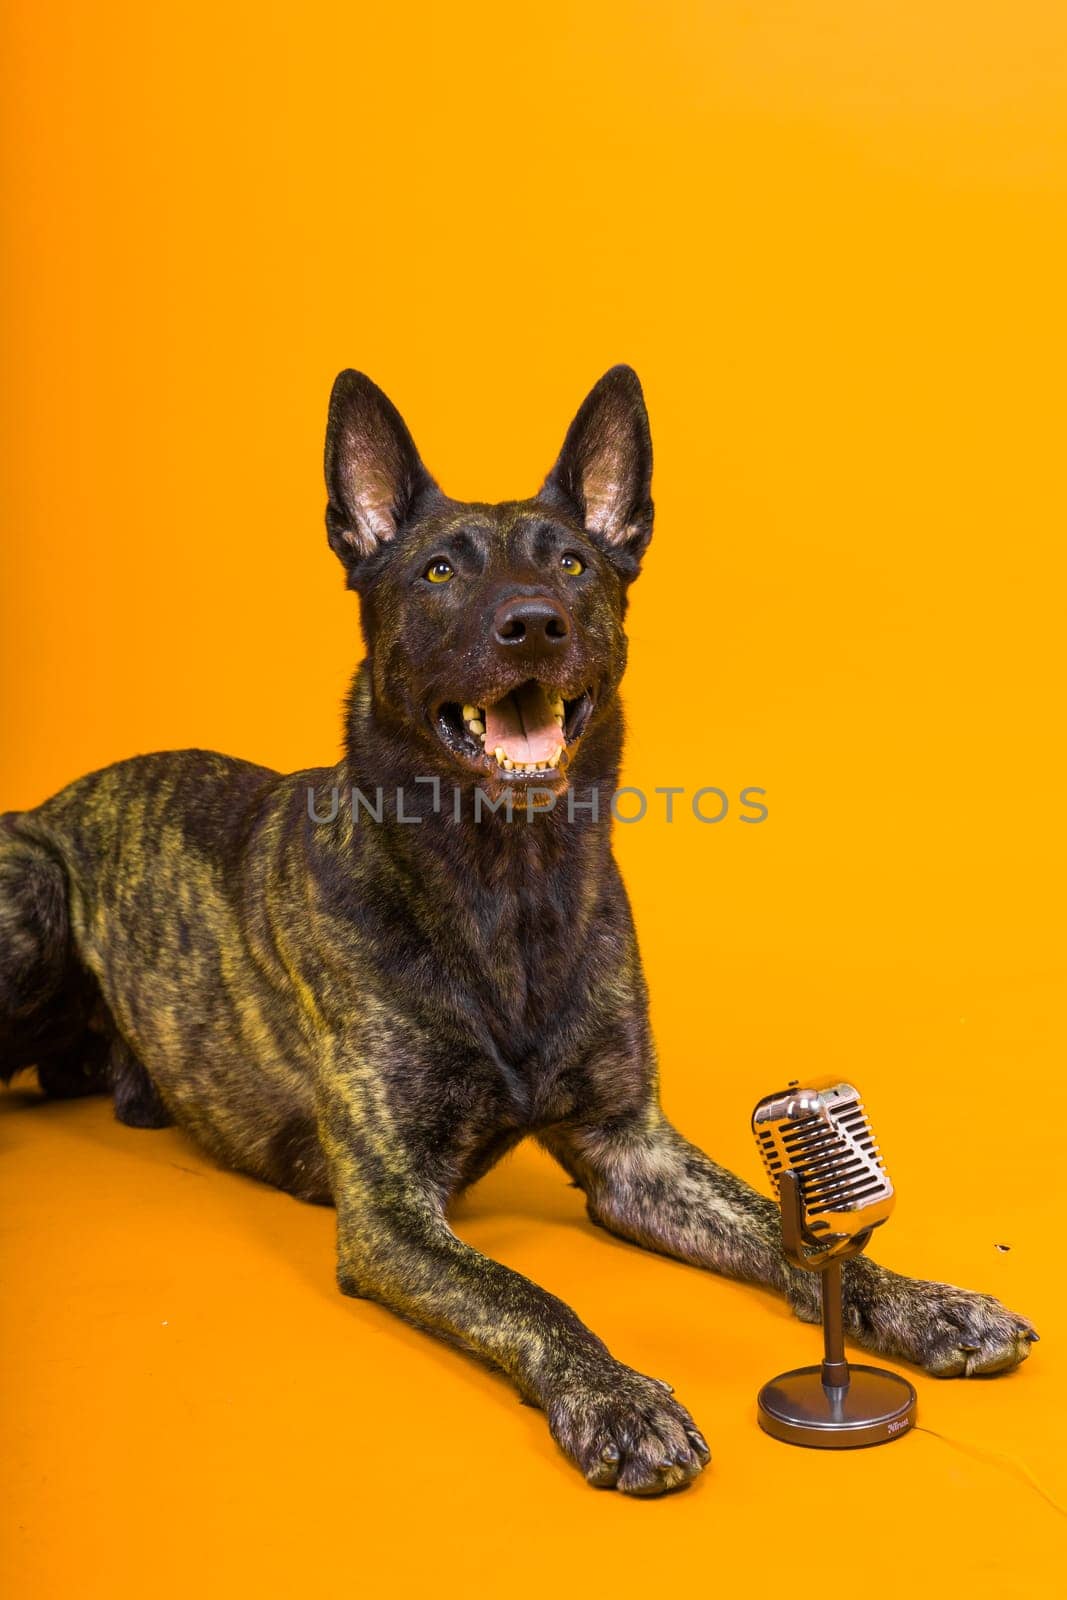 Cute singing dog Dutch shepherd in a studio red yellow background by Zelenin